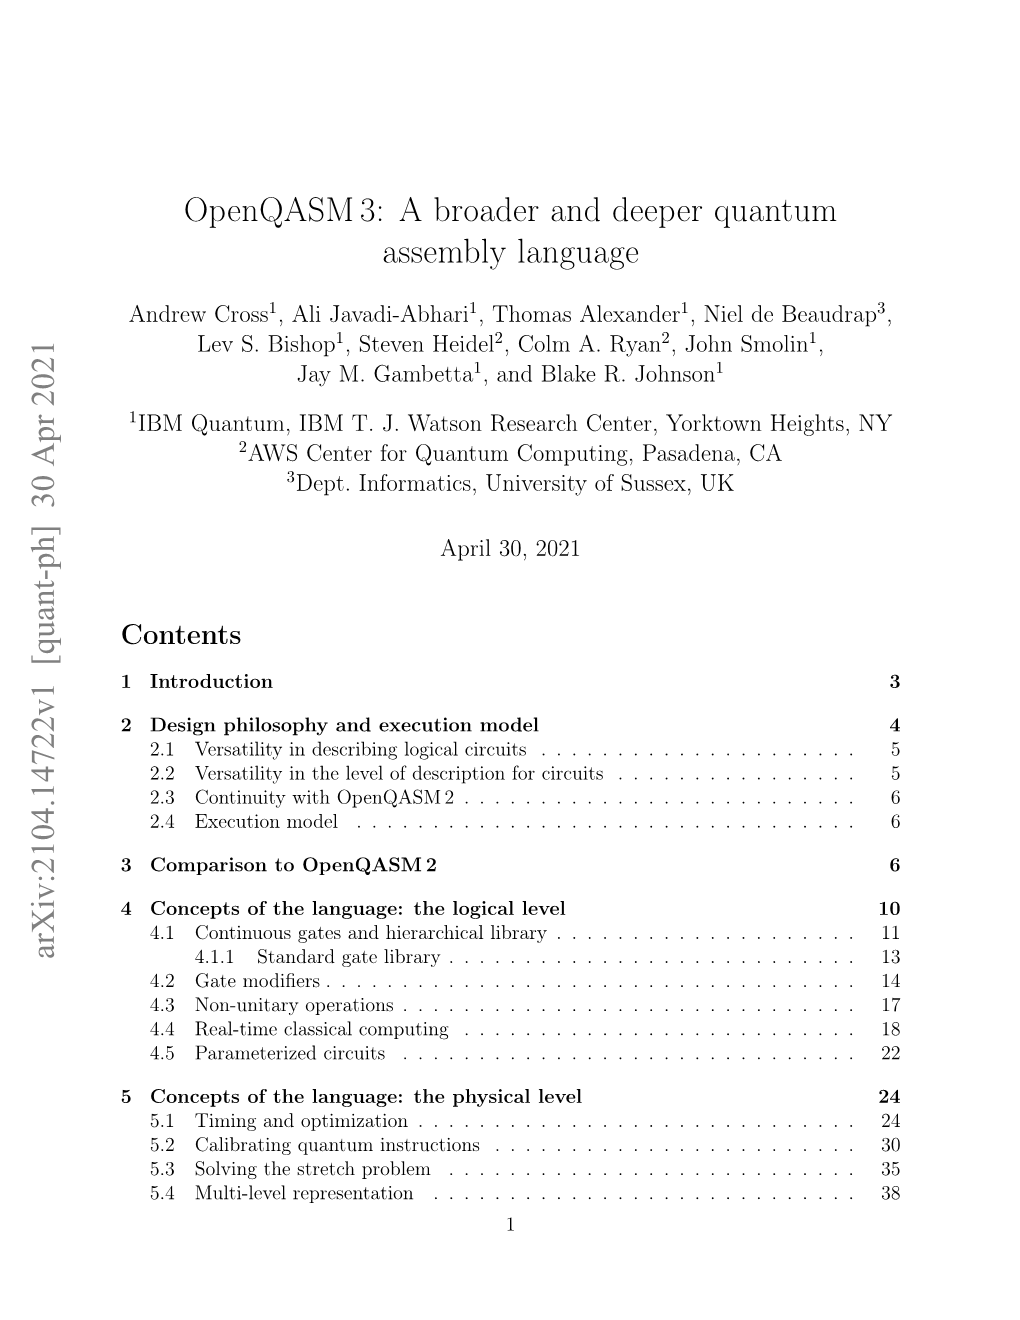 Openqasm3: a Broader and Deeper Quantum Assembly Language Arxiv